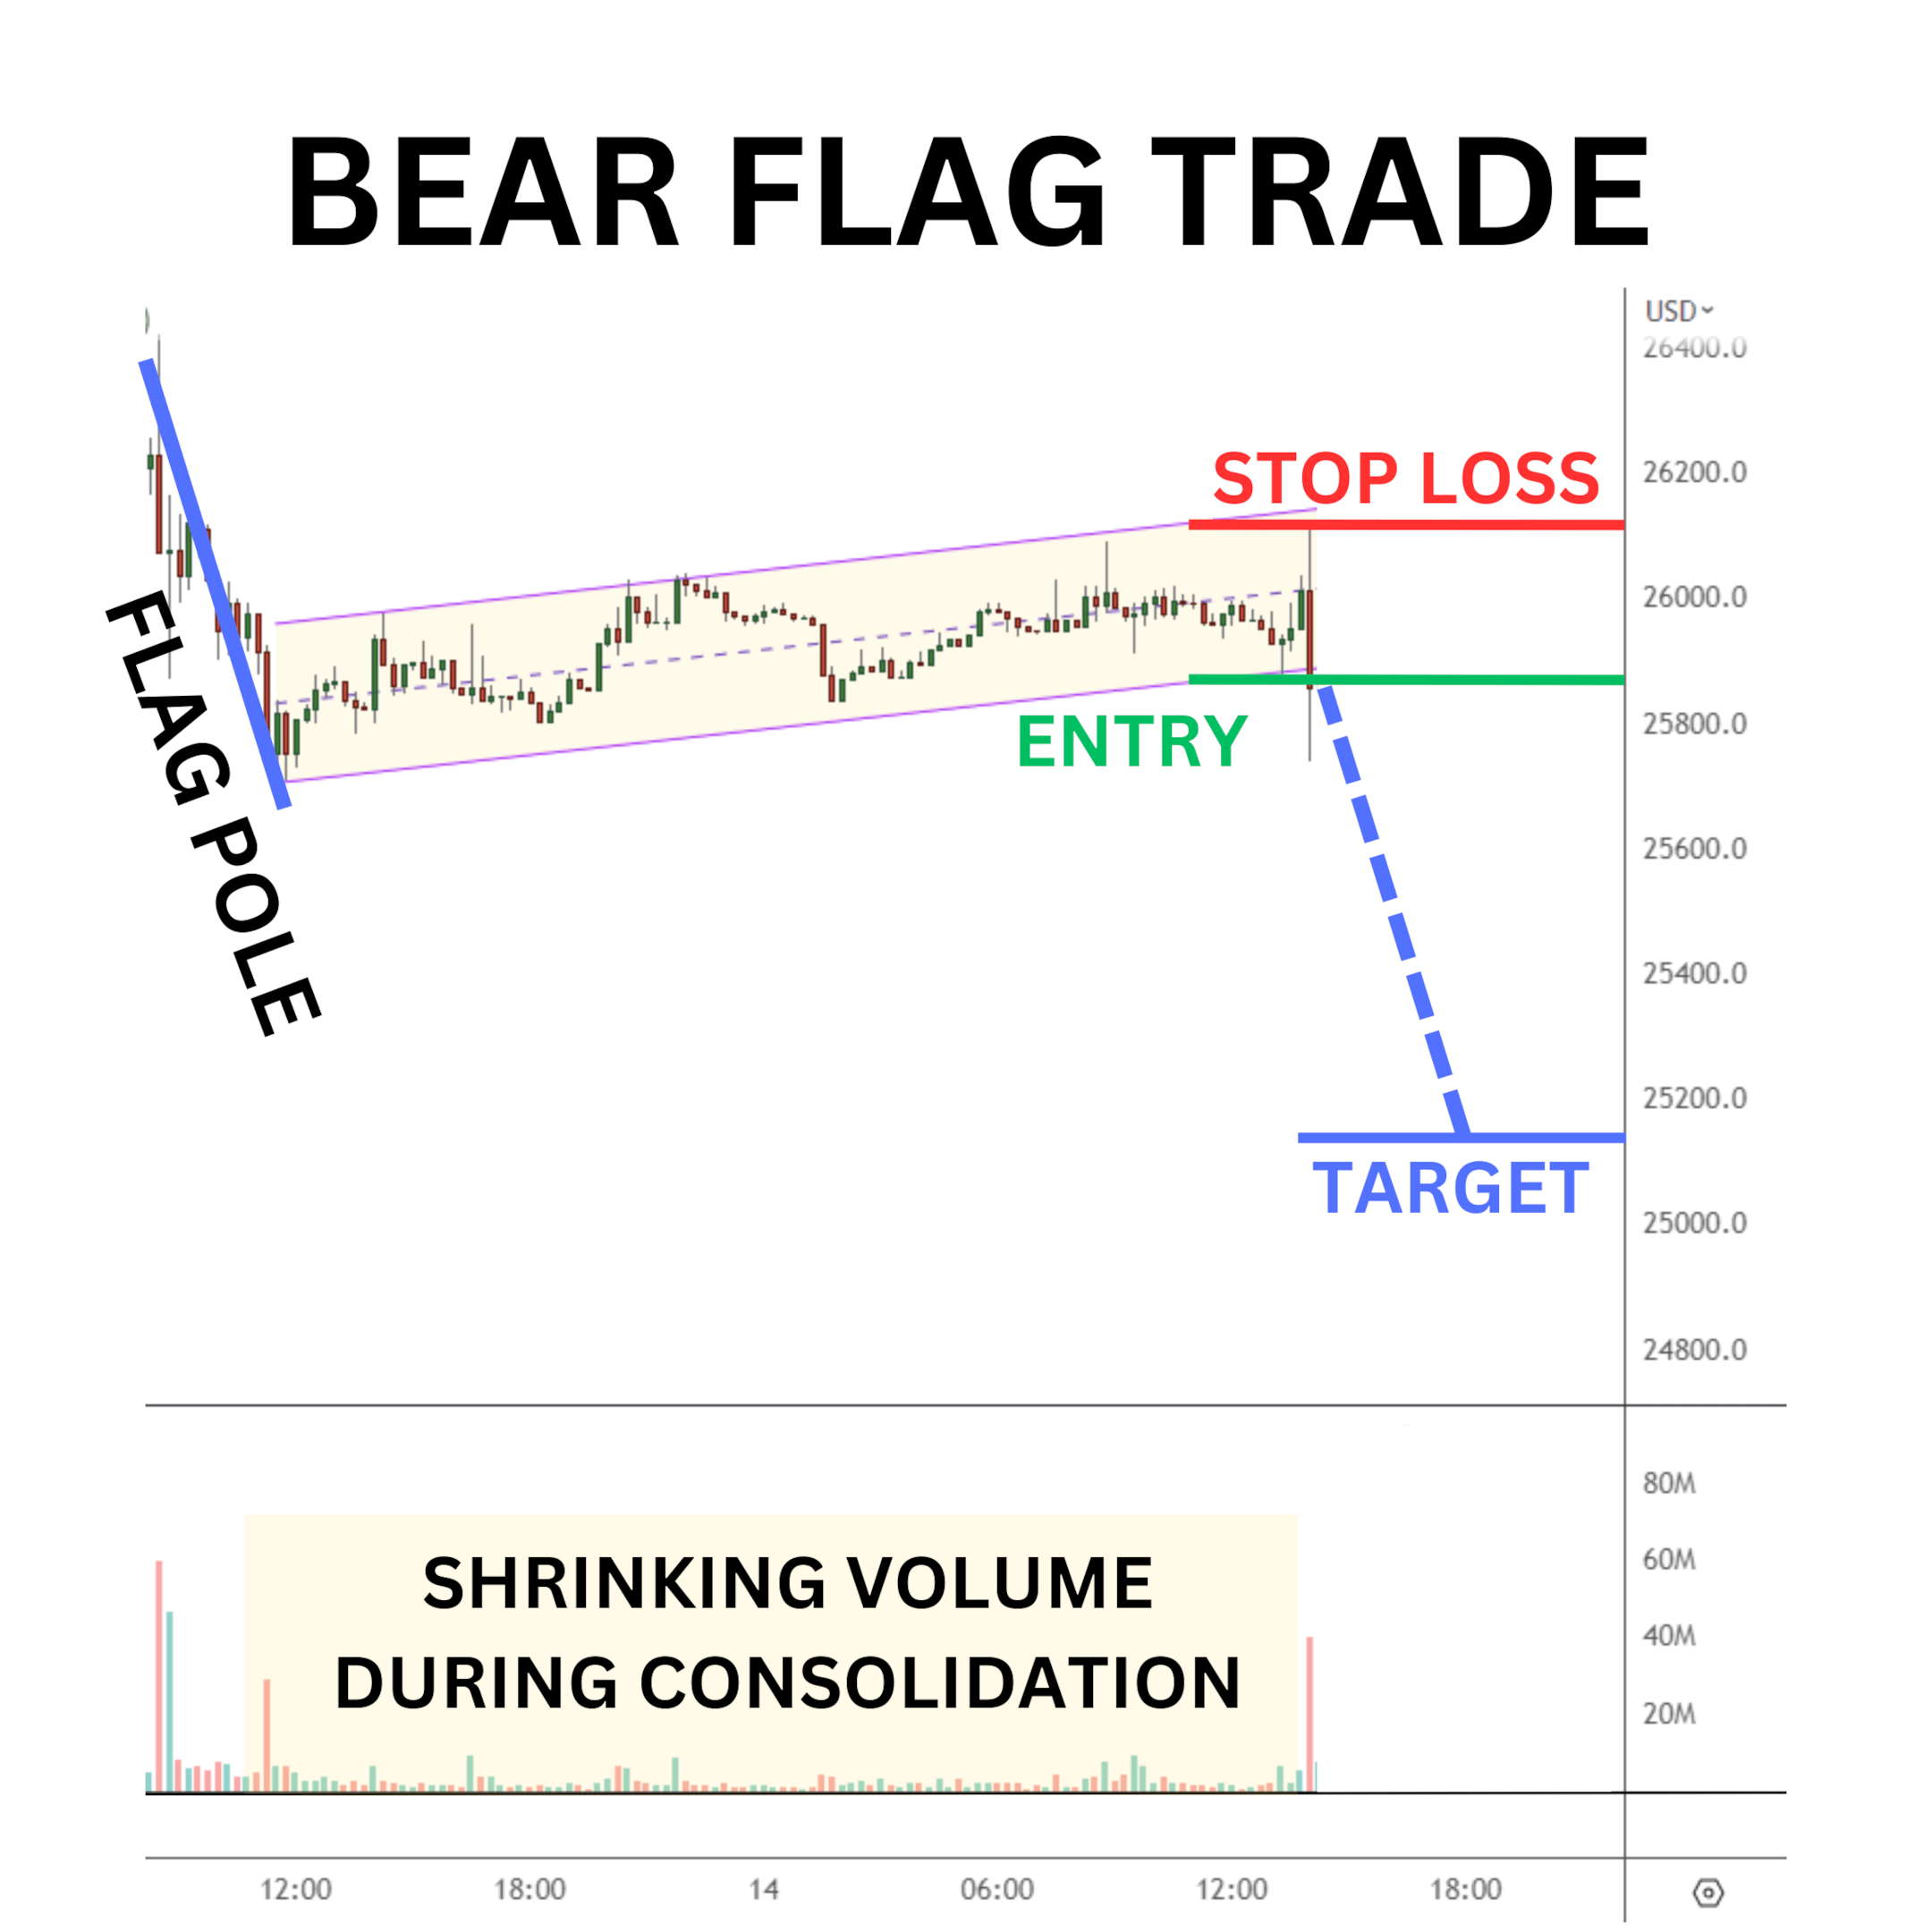 Bear flag trade example